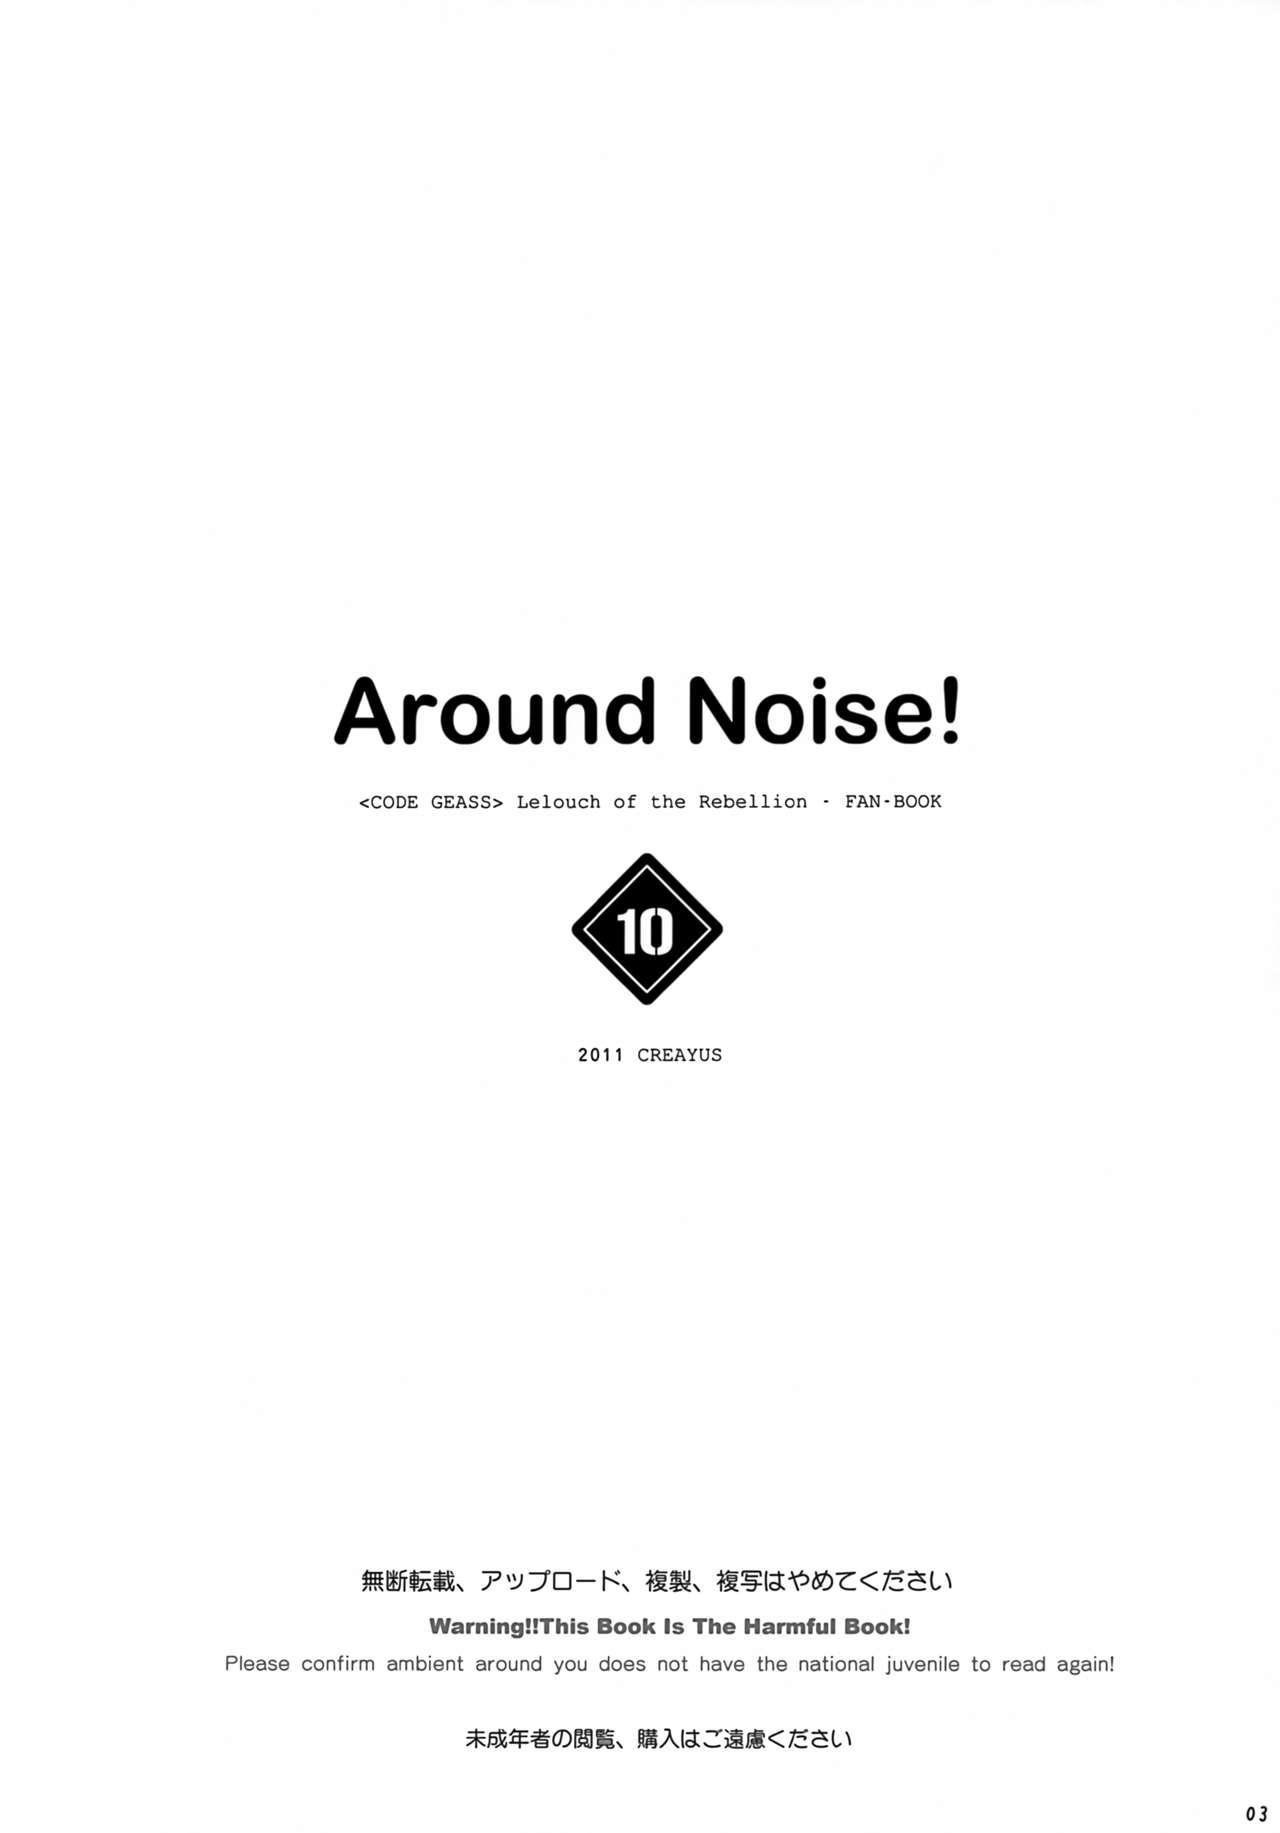 Hottie AROUND NOISE! - Code geass Dominicana - Page 3